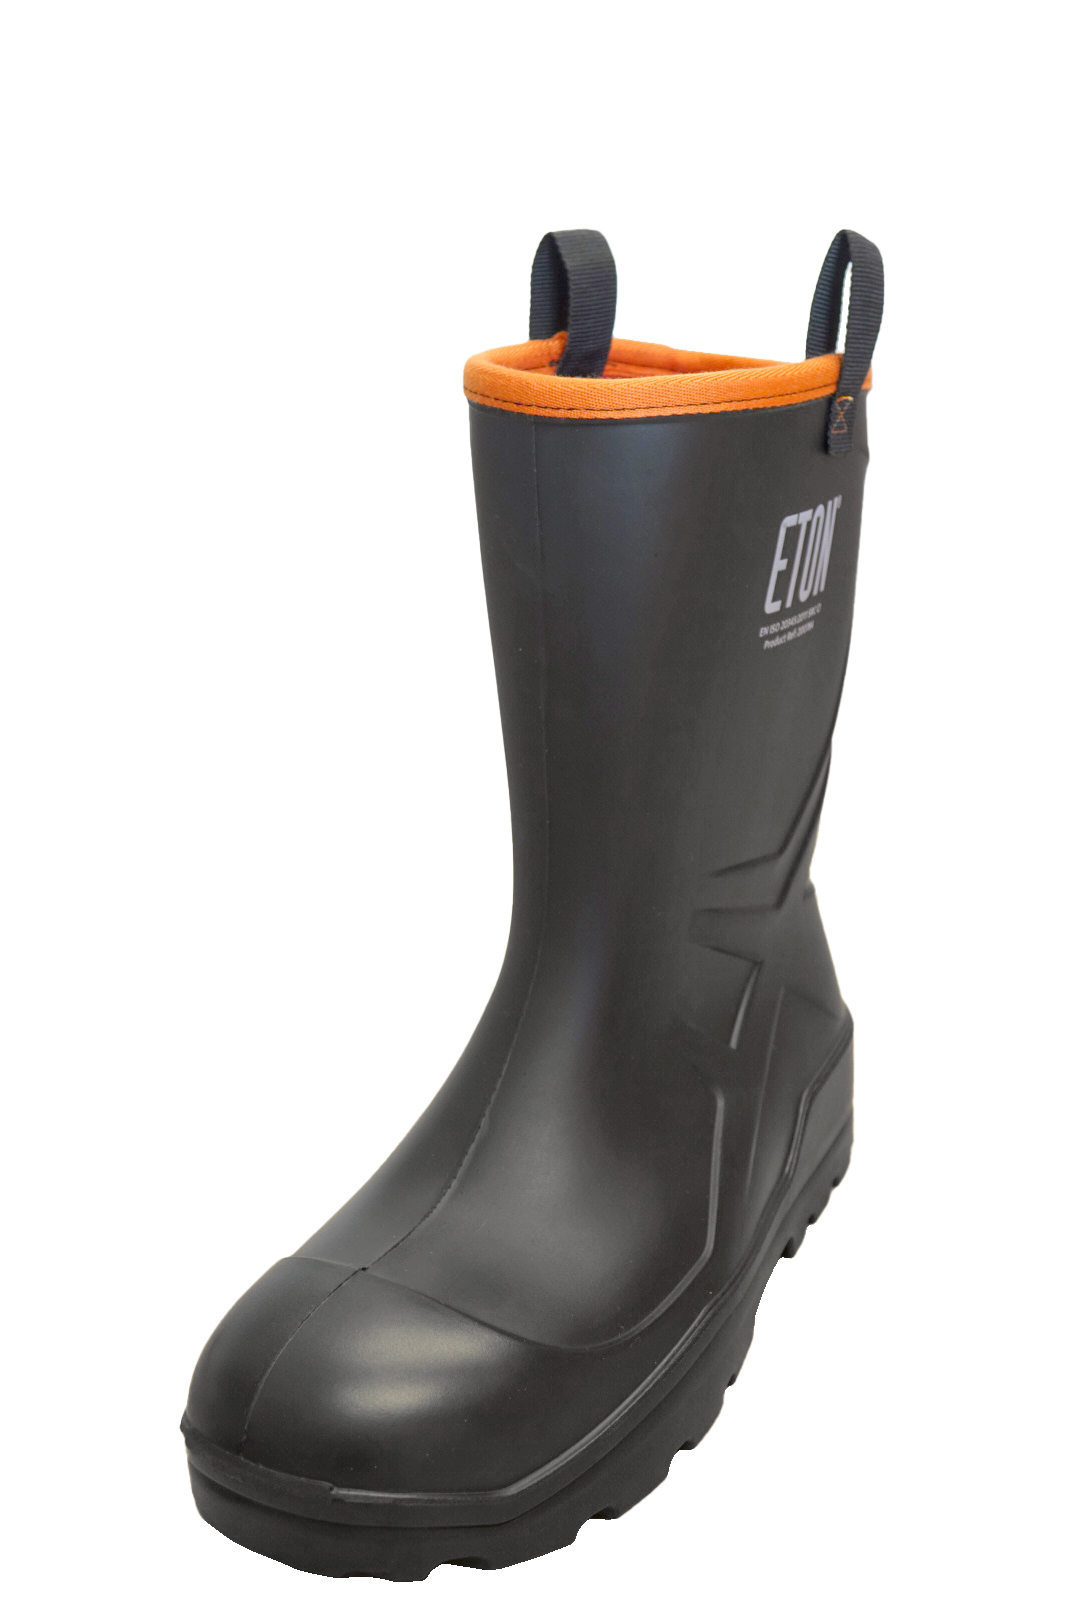 ETON DuraBoot Rigger Full Safety Boot - Size 10